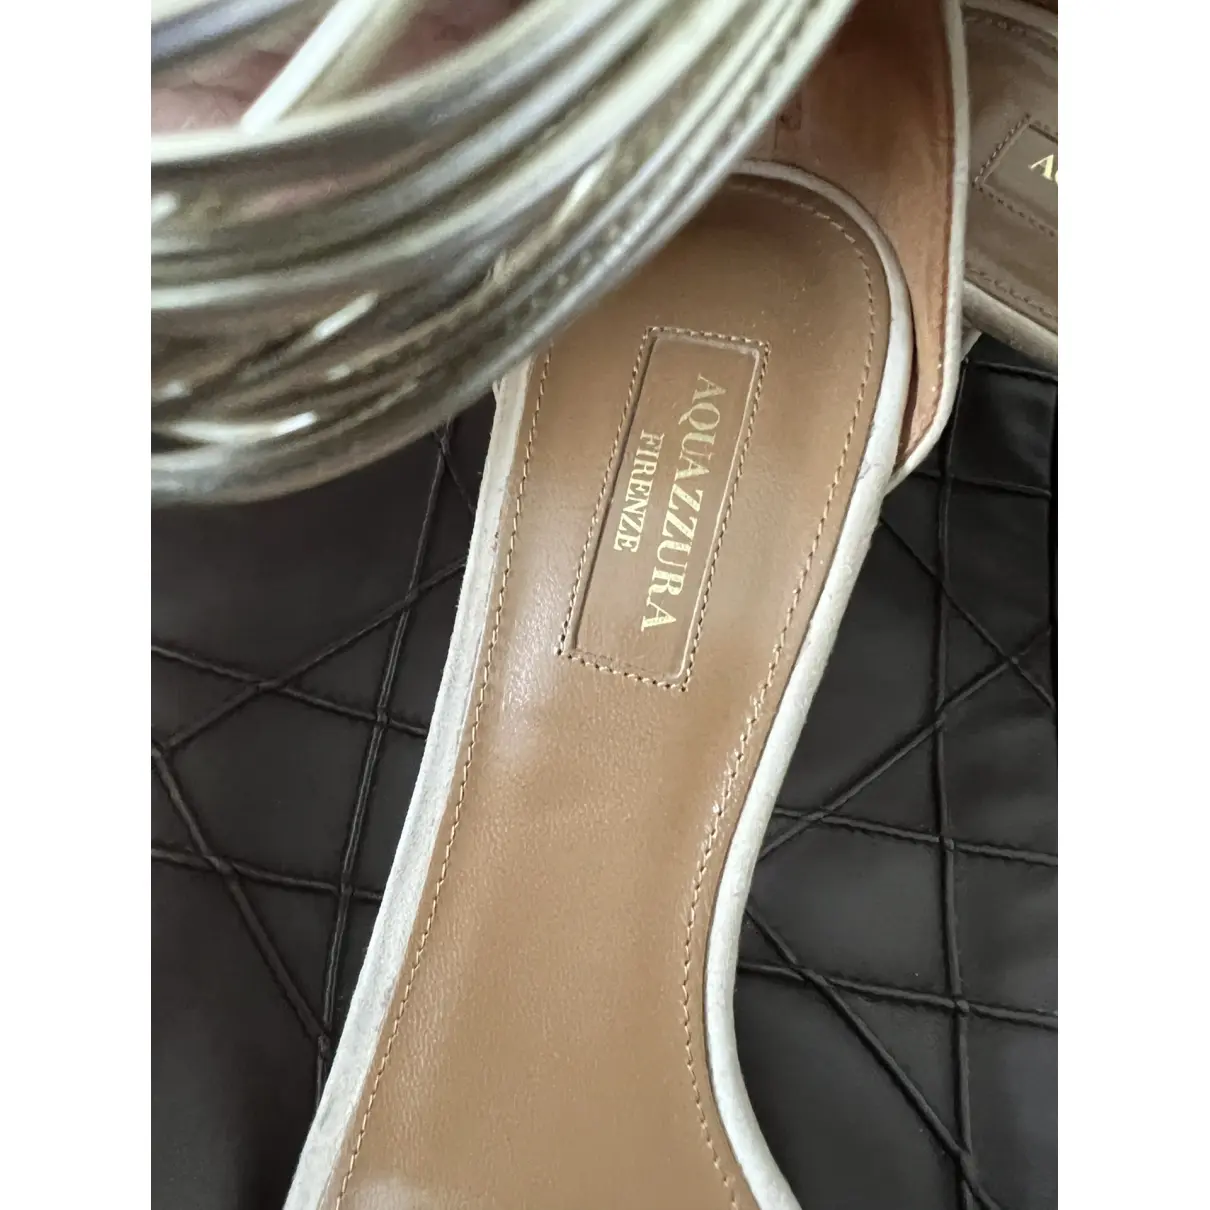 Buy Aquazzura Leather sandal online